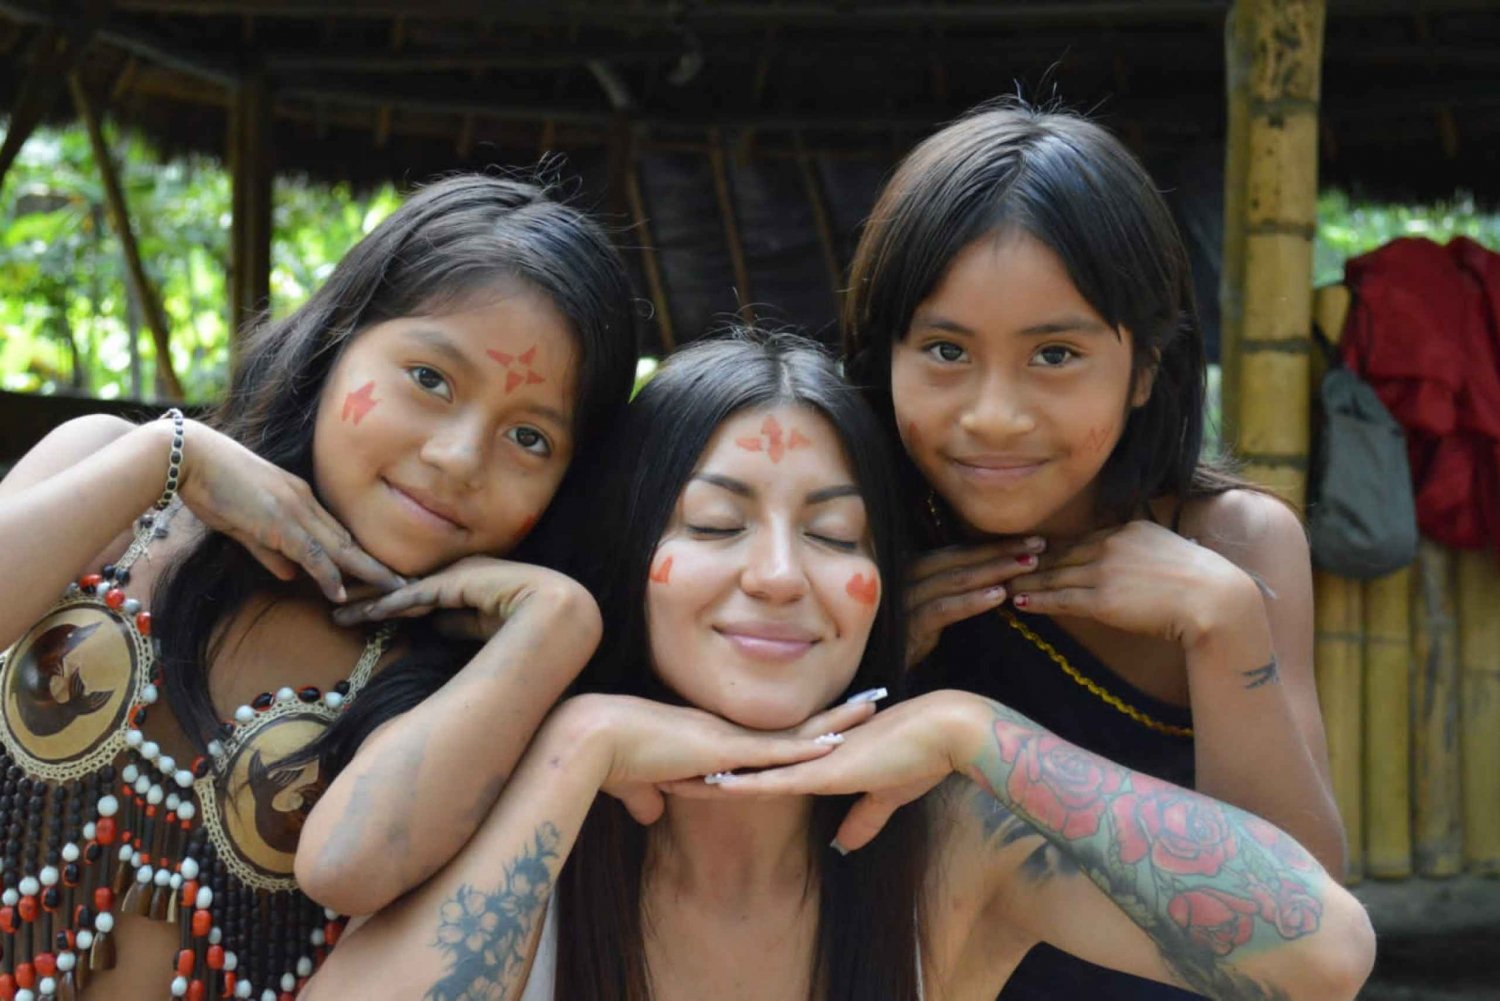 3 dage og 2 nætters jungletur fra Tena i Napo Amazonas-regionen